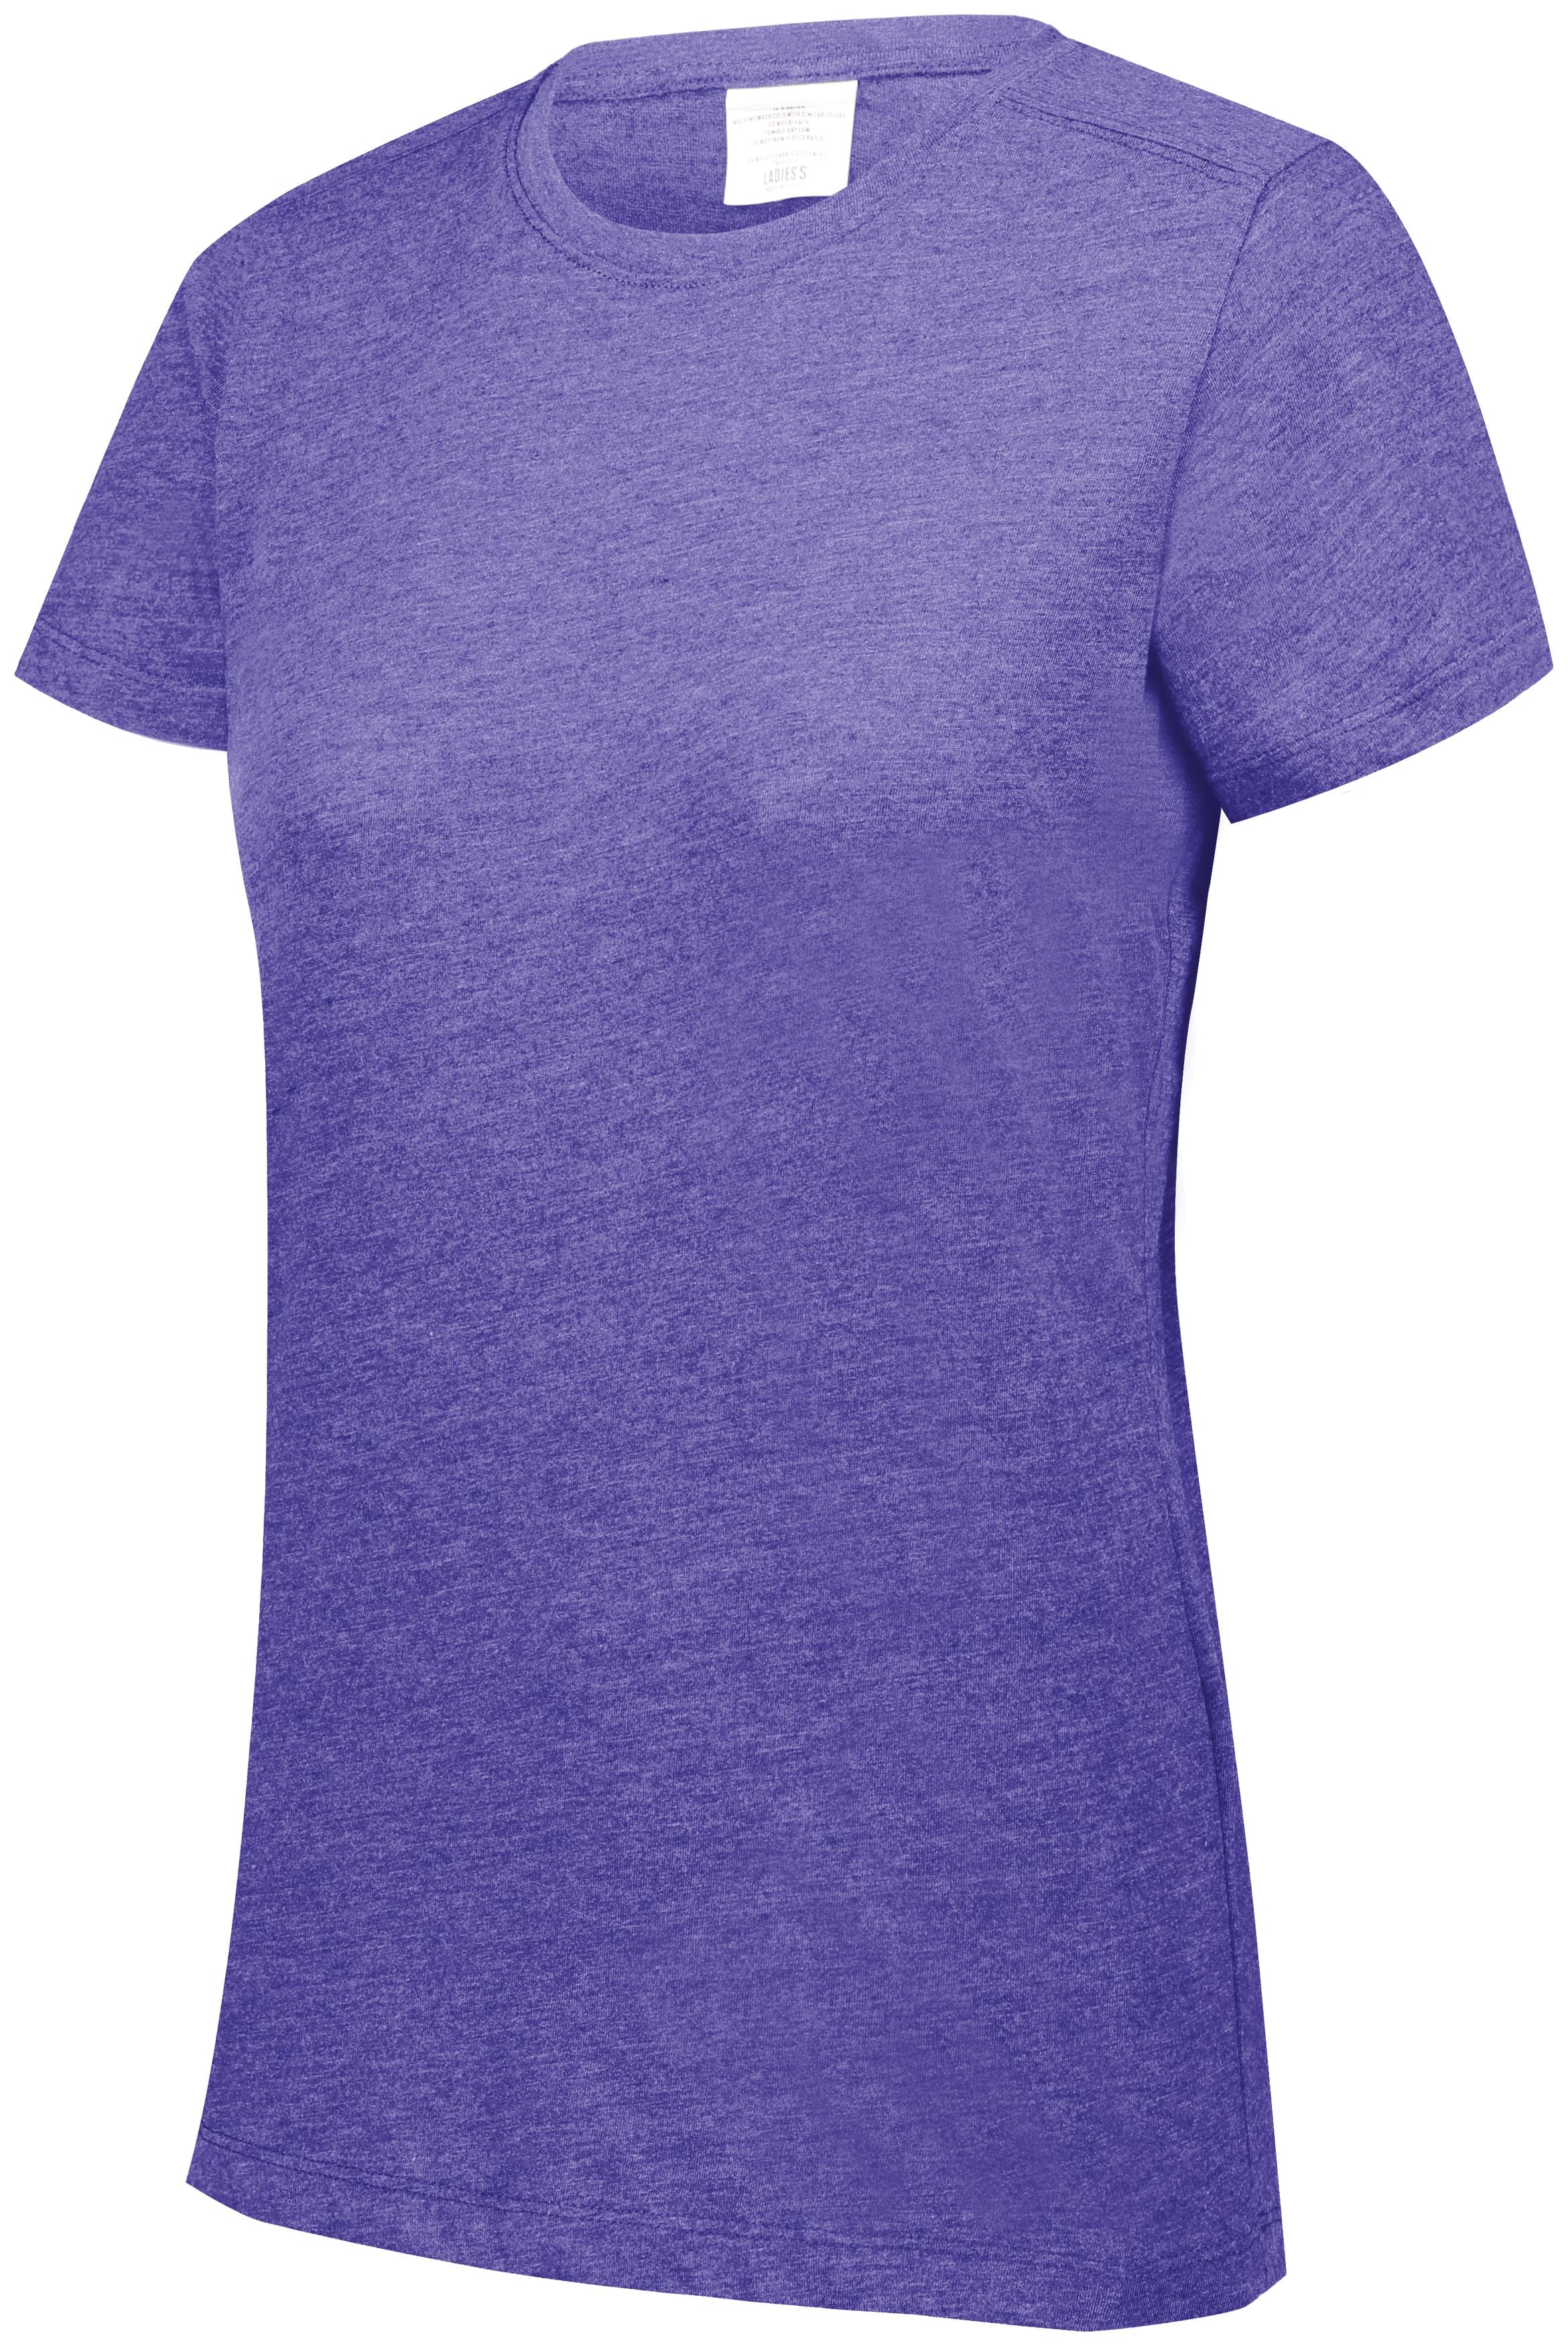 Augusta Sportswear Ladies Tri-Blend T-Shirt in Purple Heather  -Part of the Ladies, Ladies-Tee-Shirt, T-Shirts, Augusta-Products, Shirts product lines at KanaleyCreations.com